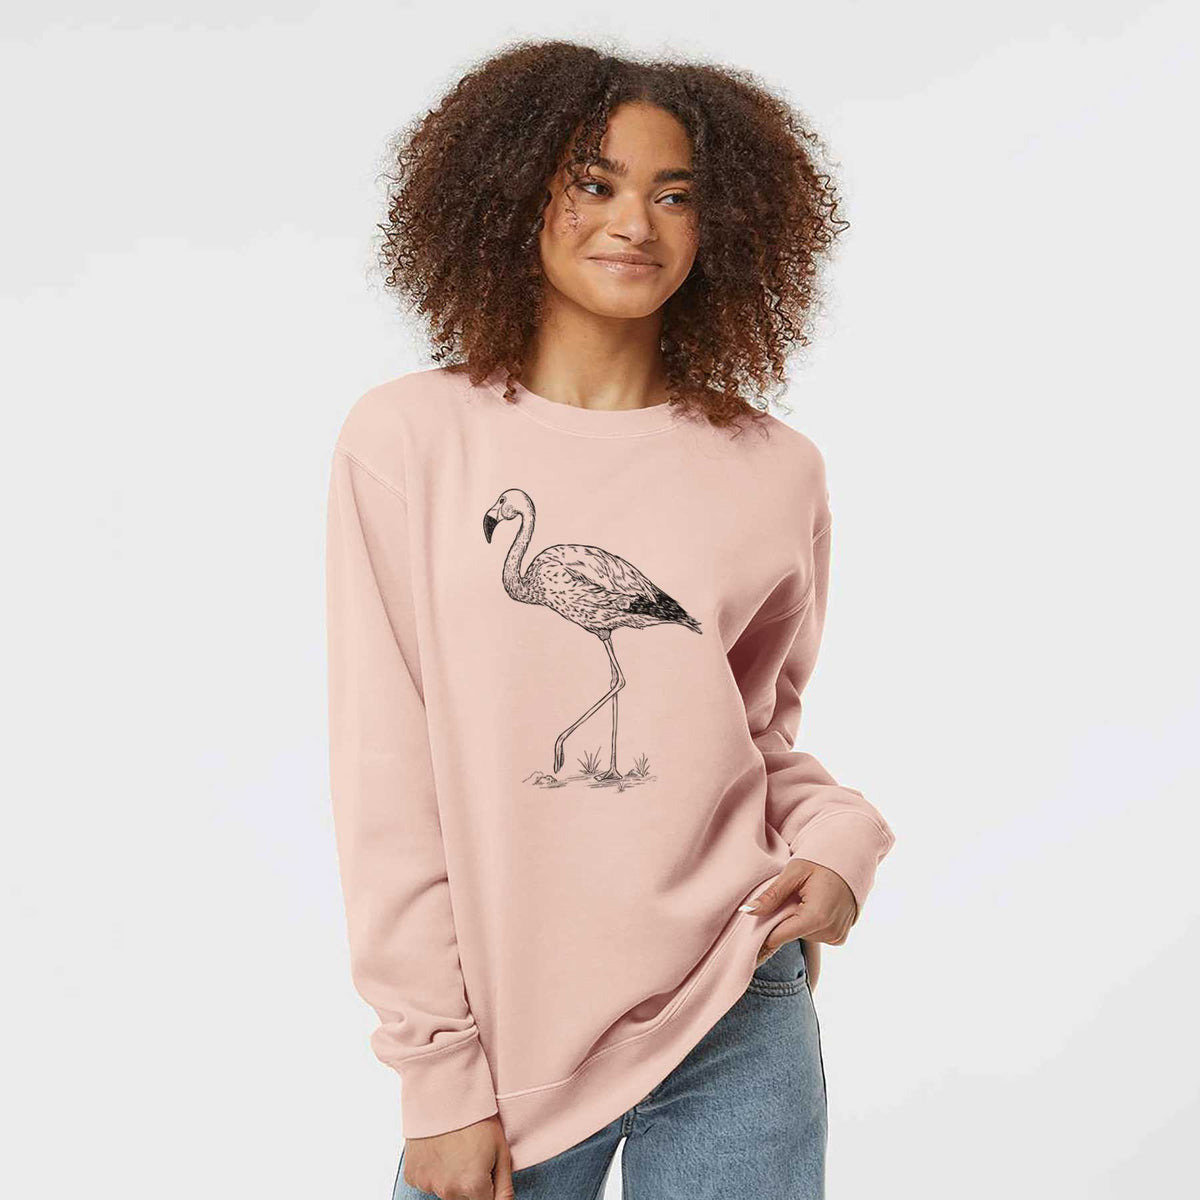 Andean Flamingo - Phoenicoparrus andinus - Unisex Pigment Dyed Crew Sweatshirt